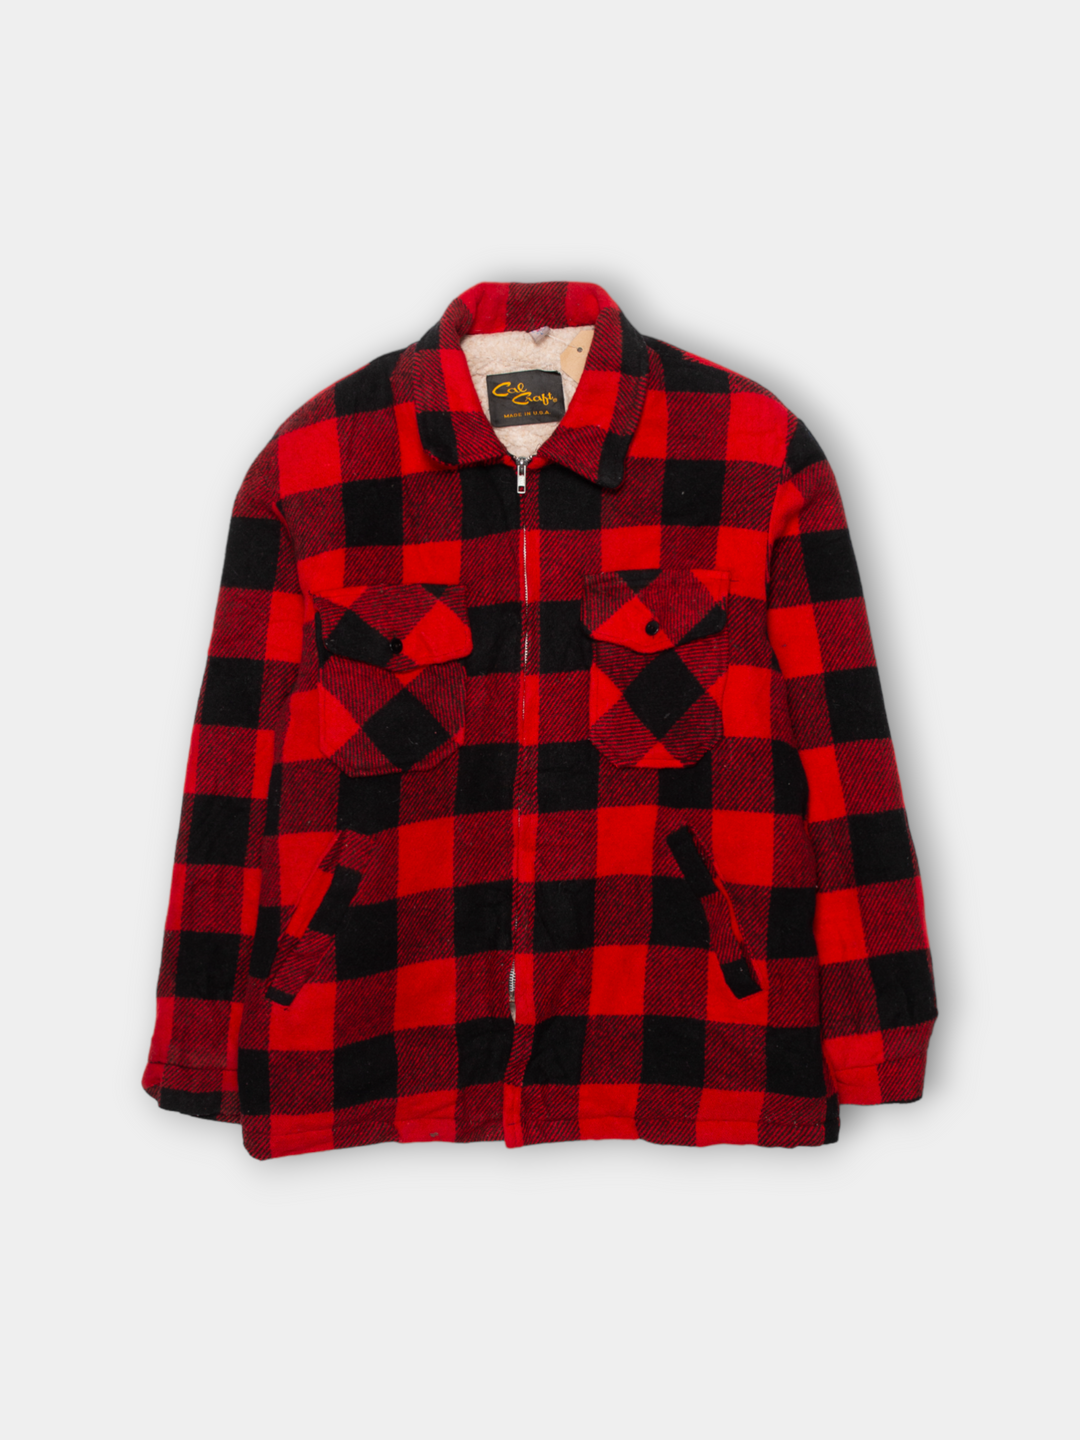 Vintage Heavy Woolen Lumberjack Shirt (L)